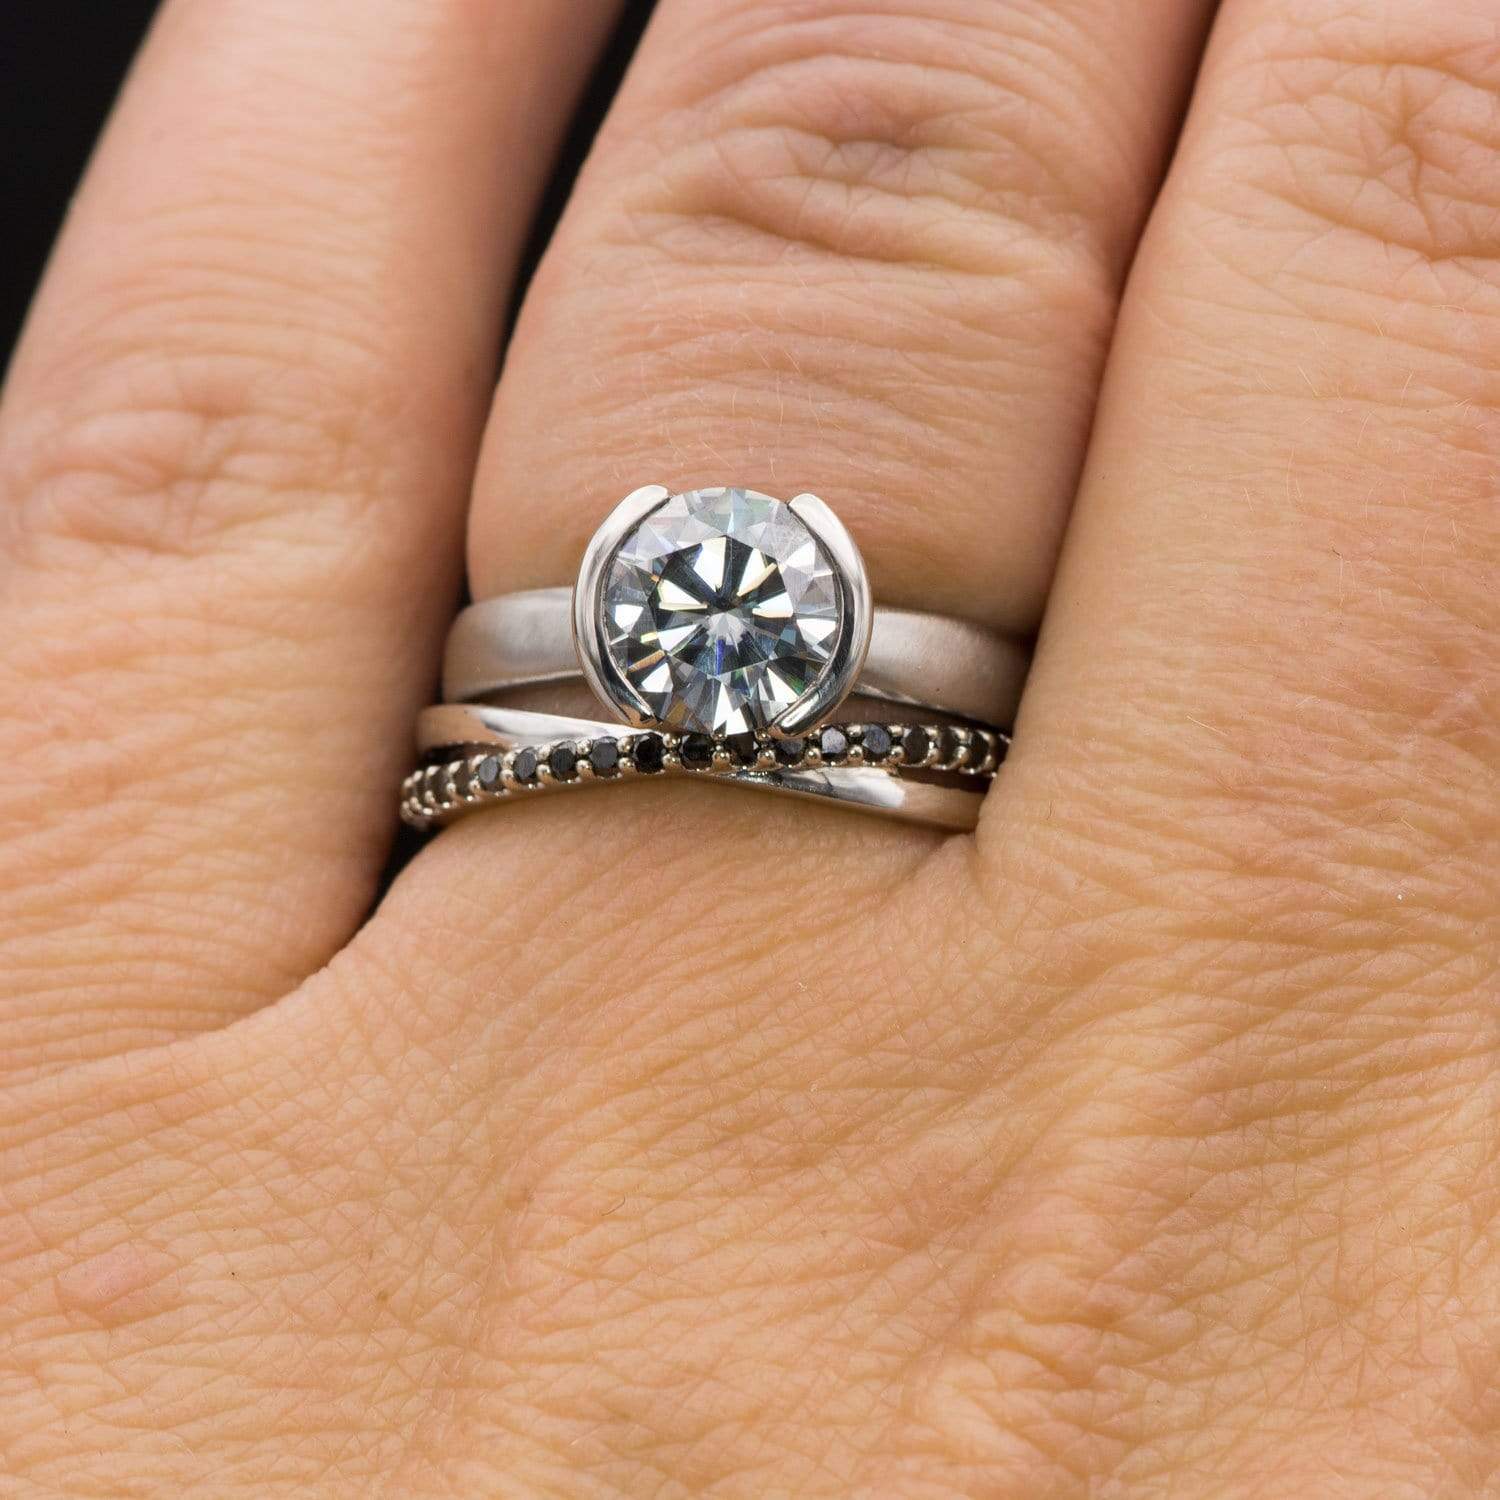 Criss Cross Black Diamond Band - Contoured Wedding Ring with Black Diamonds Ring by Nodeform